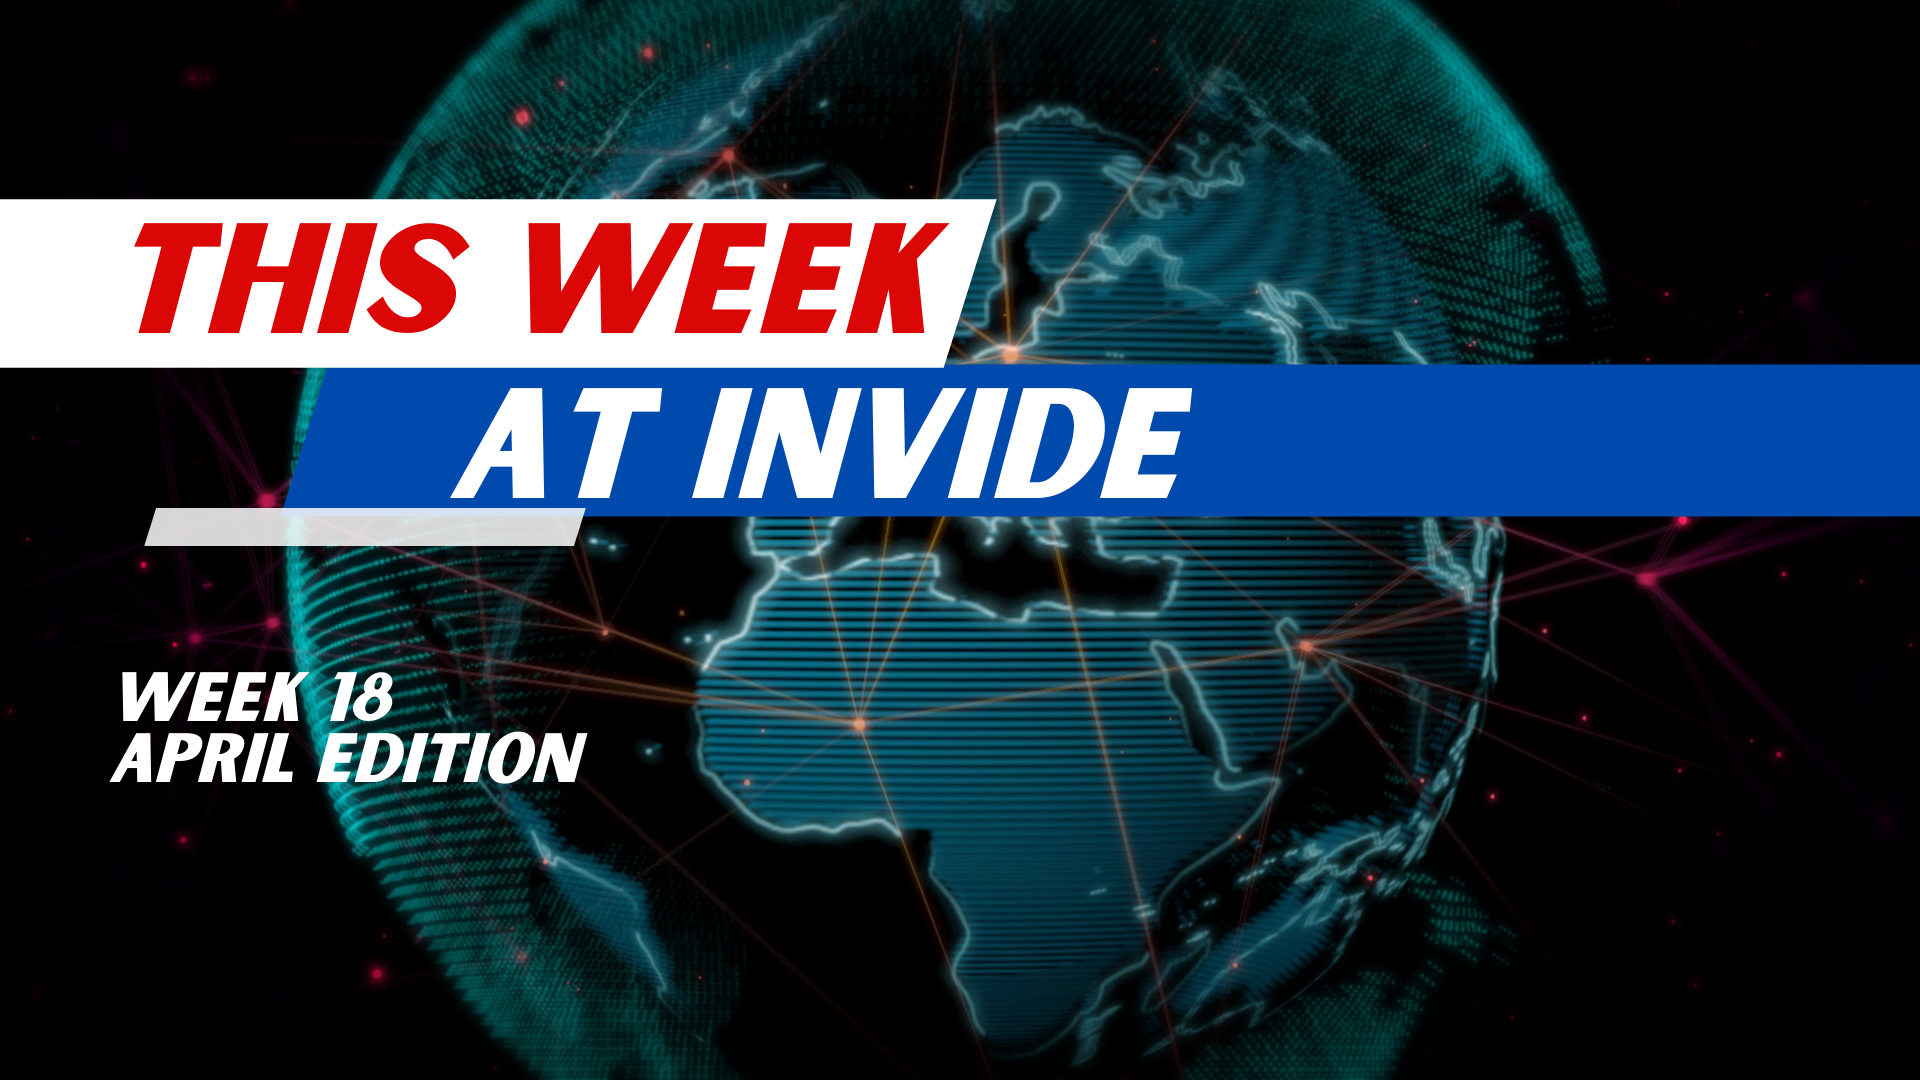 This week at Invide-April Edition [Week 18]